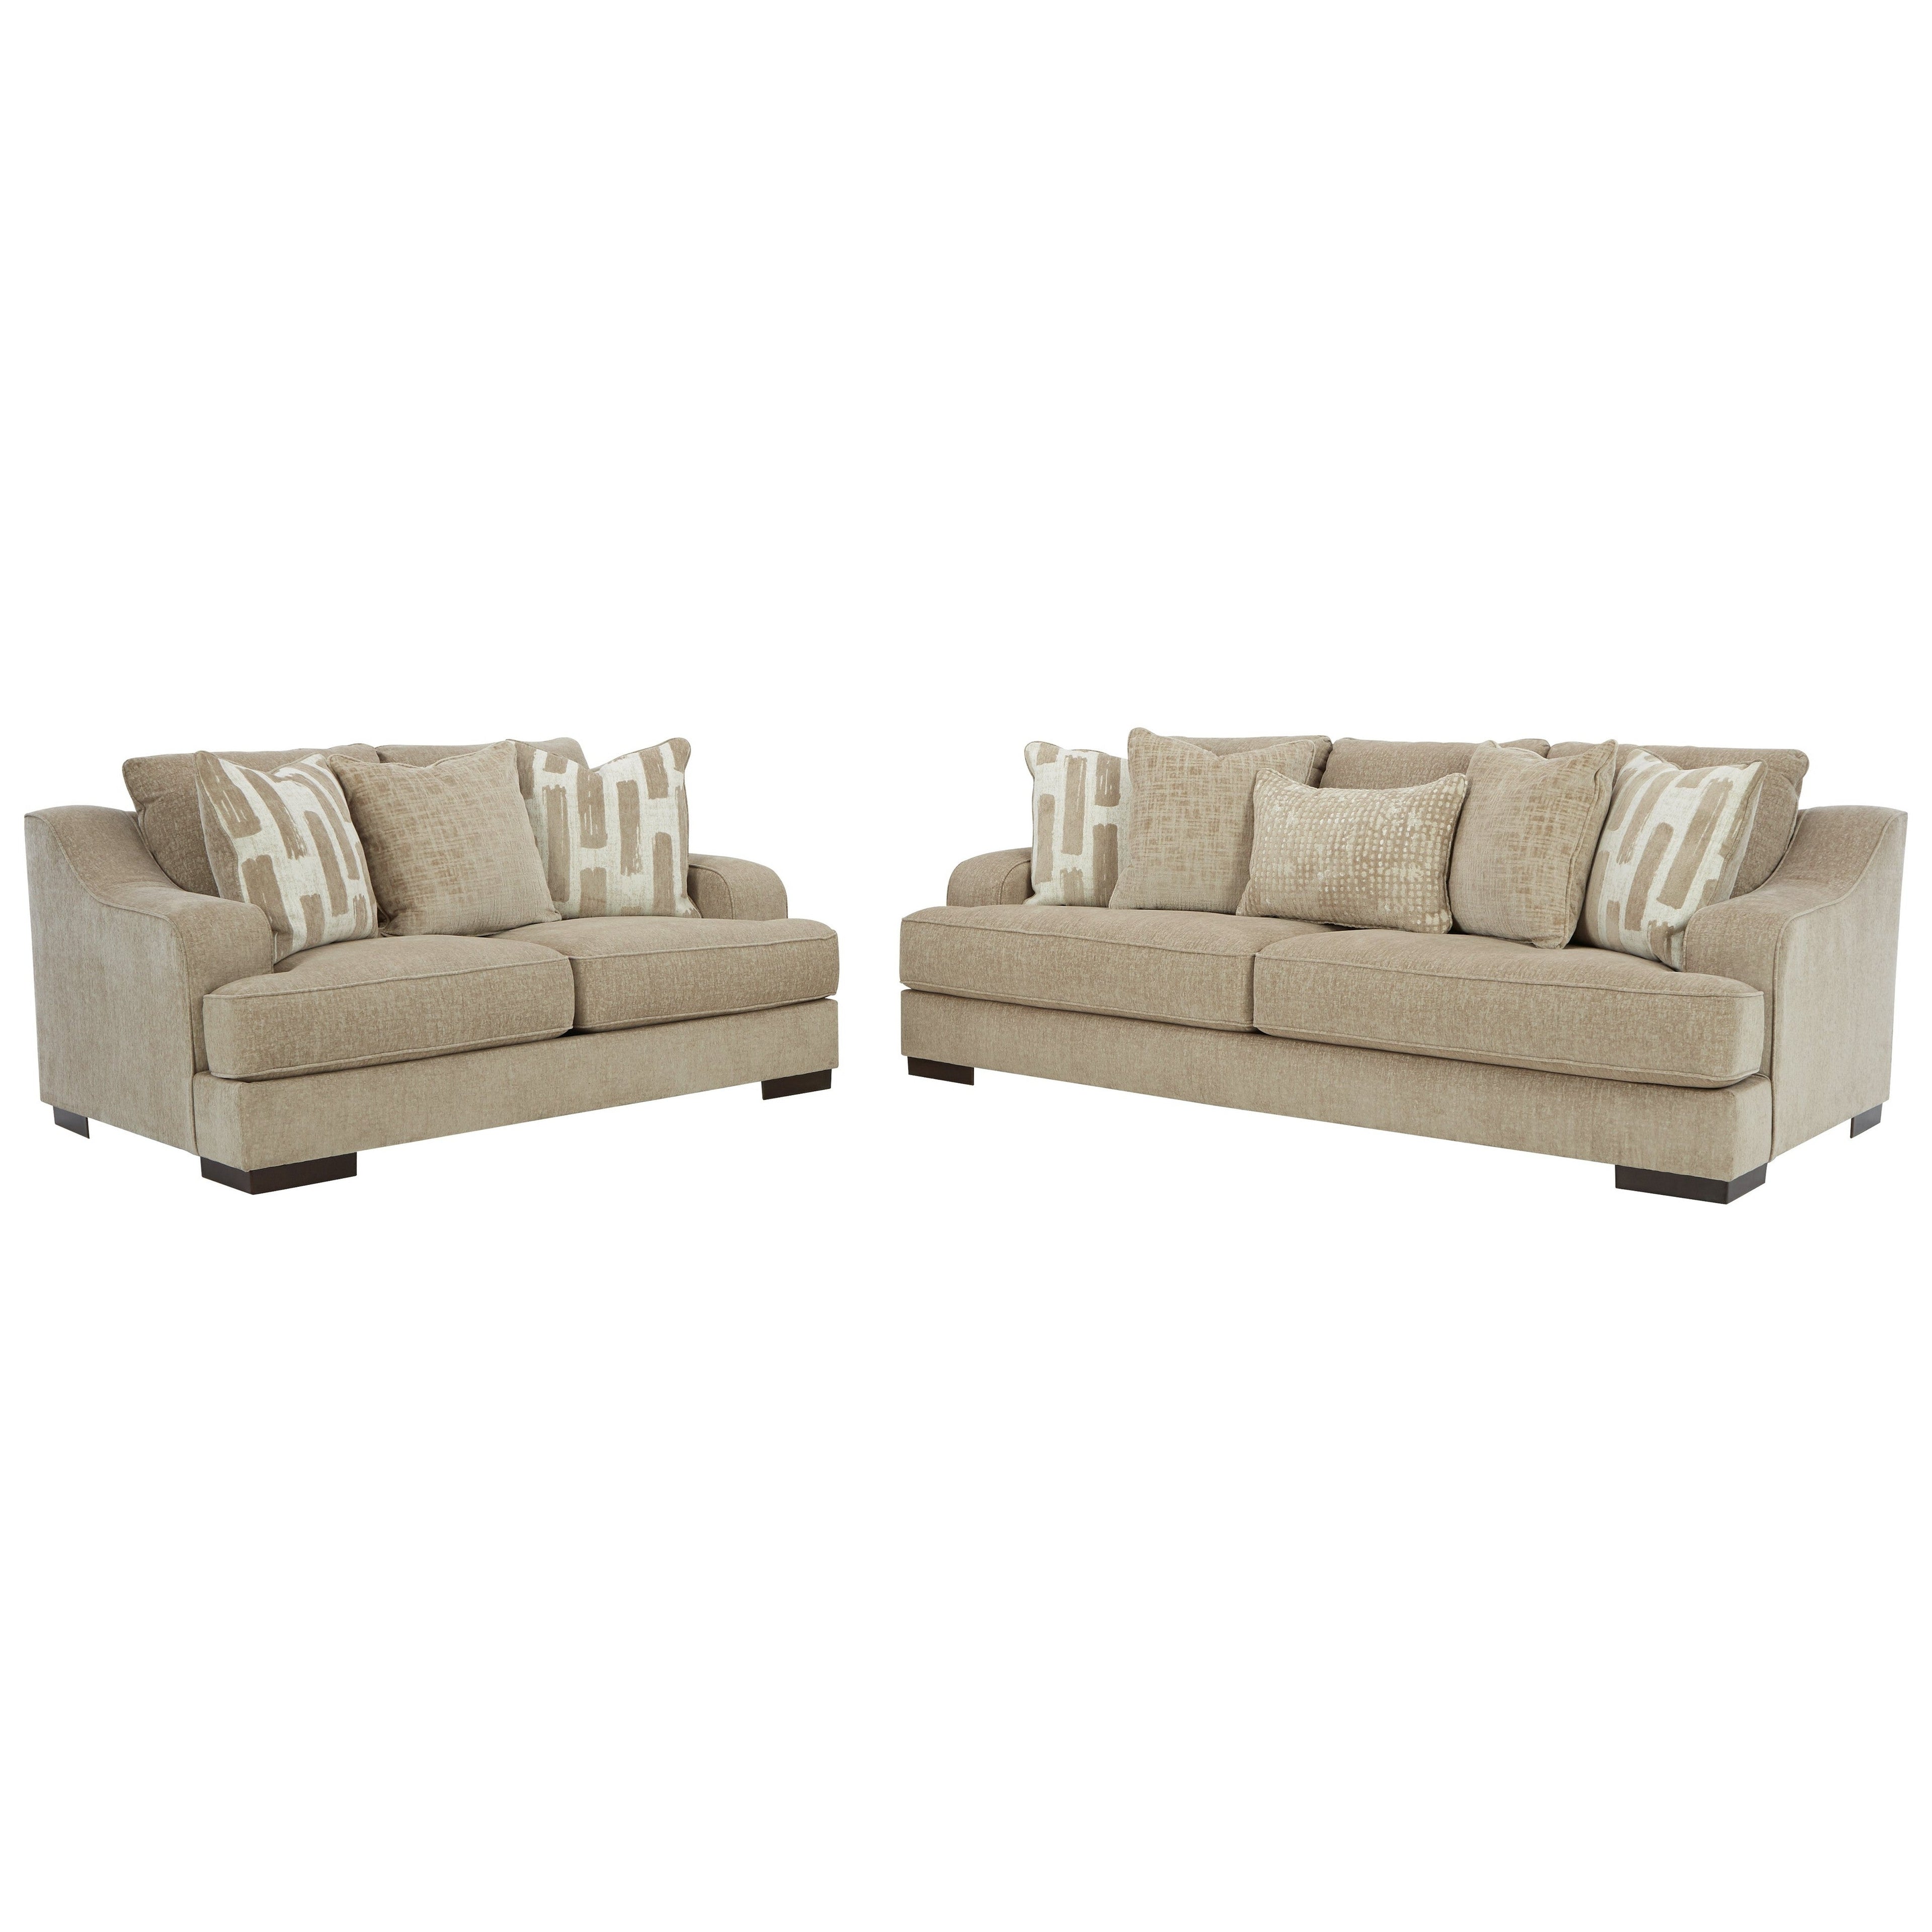 Lessinger Sofa and Loveseat Ash-50011U1